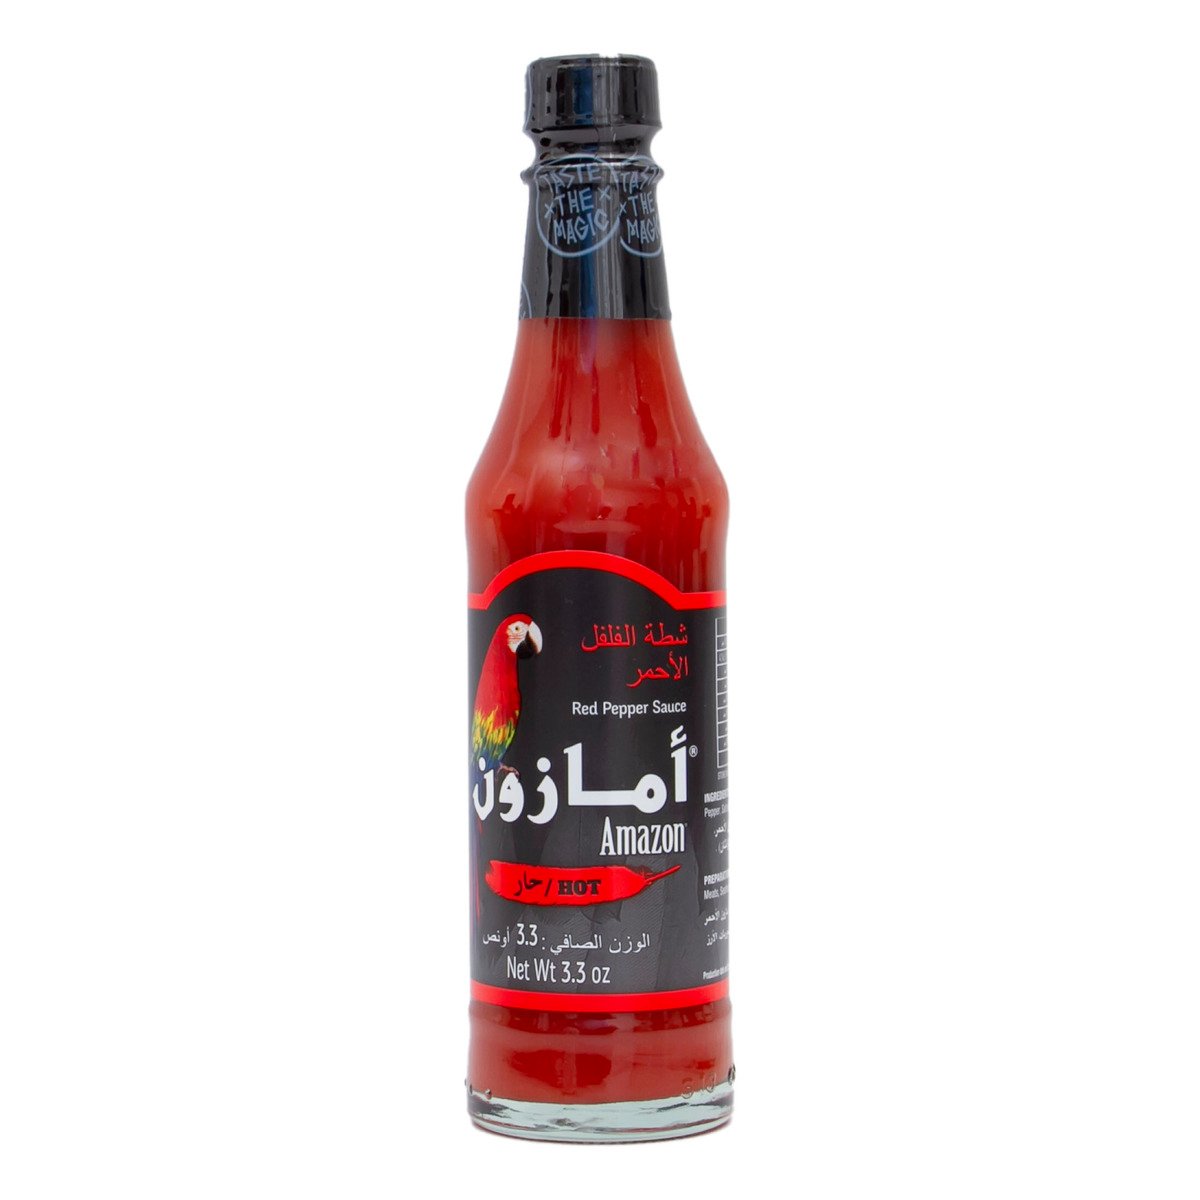 Amazon Hot Red Pepper Sauce 98 ml